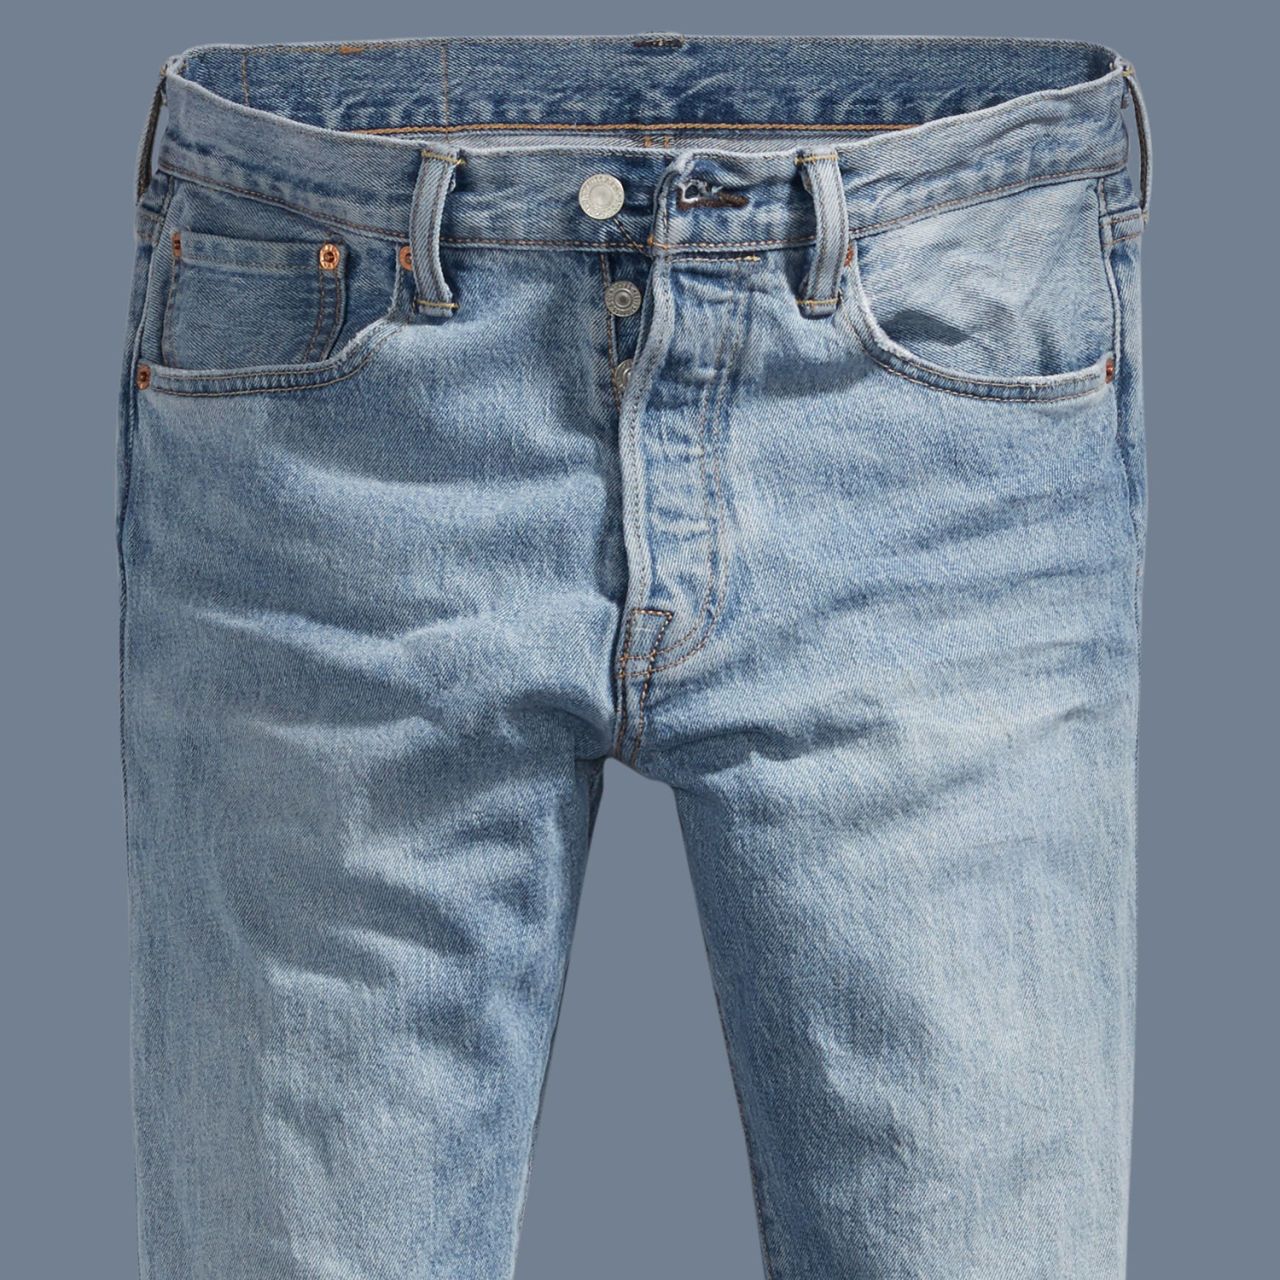 the best denim jeans